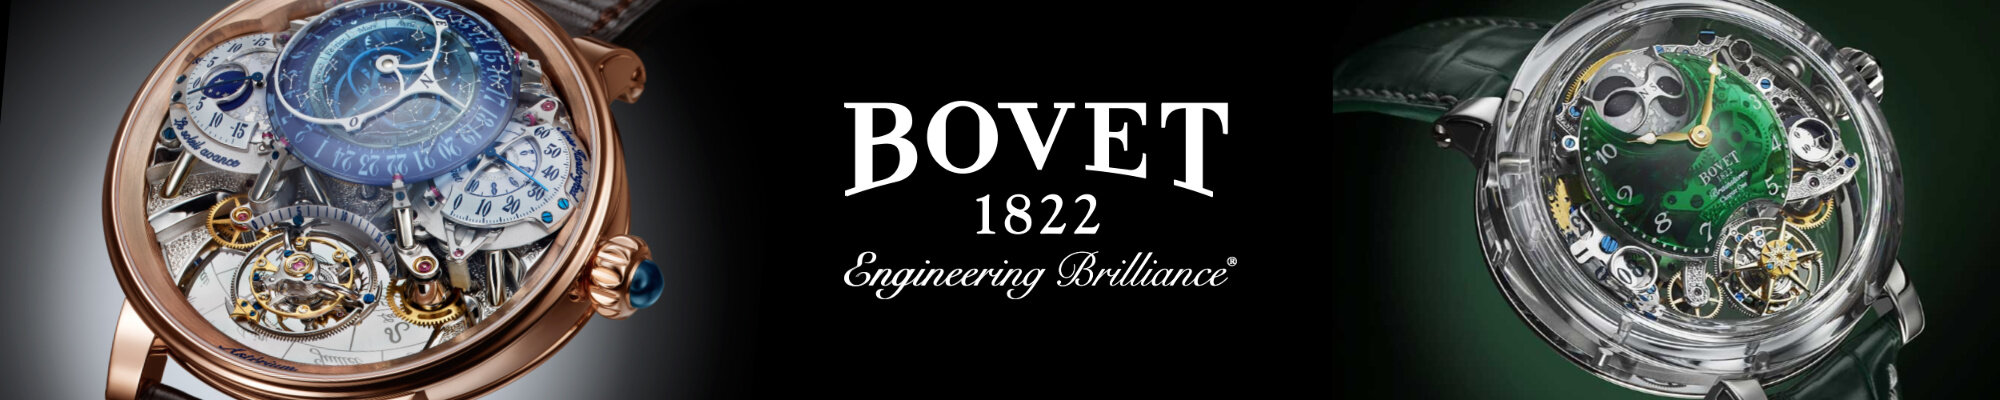 Bovet-top-ad-banner-april-2020.jpg